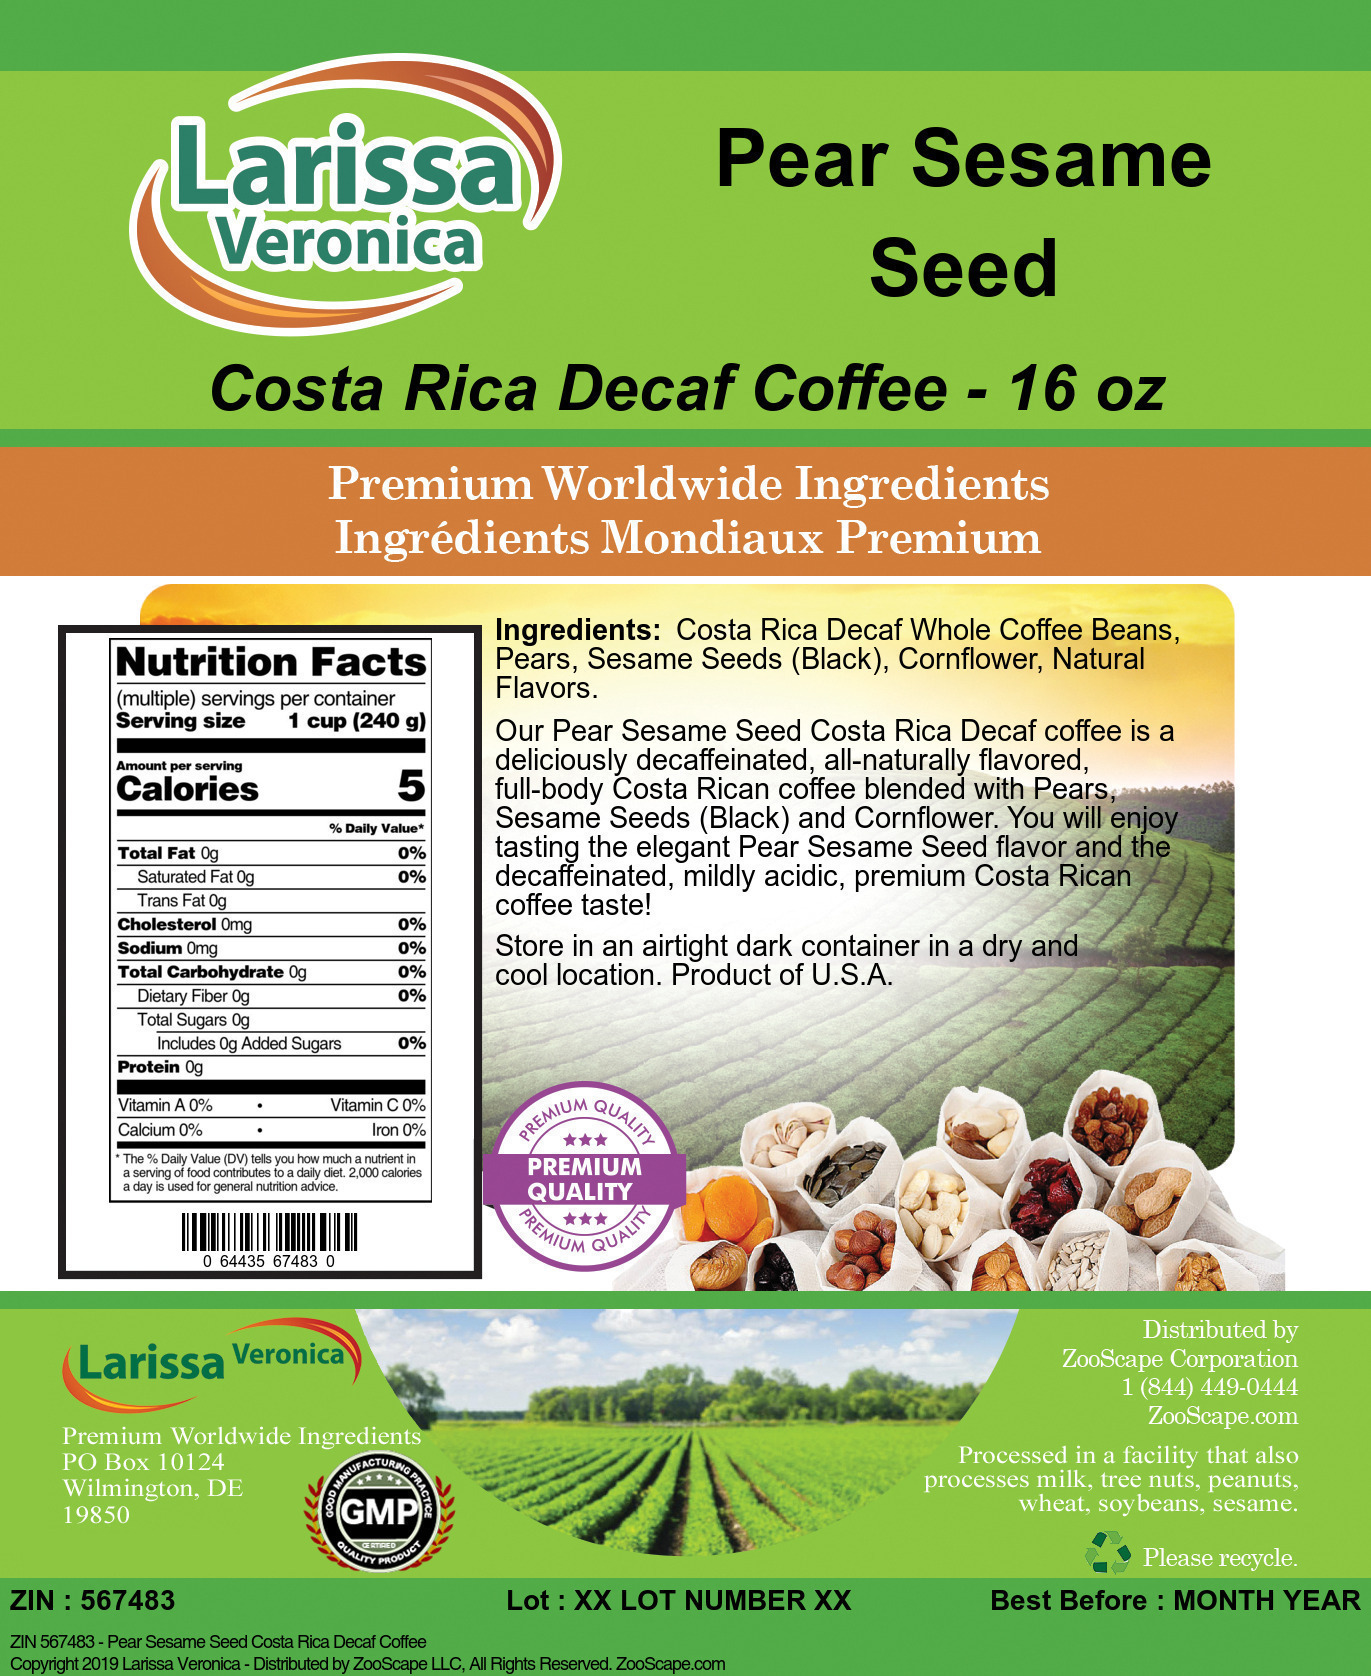 Pear Sesame Seed Costa Rica Decaf Coffee - Label